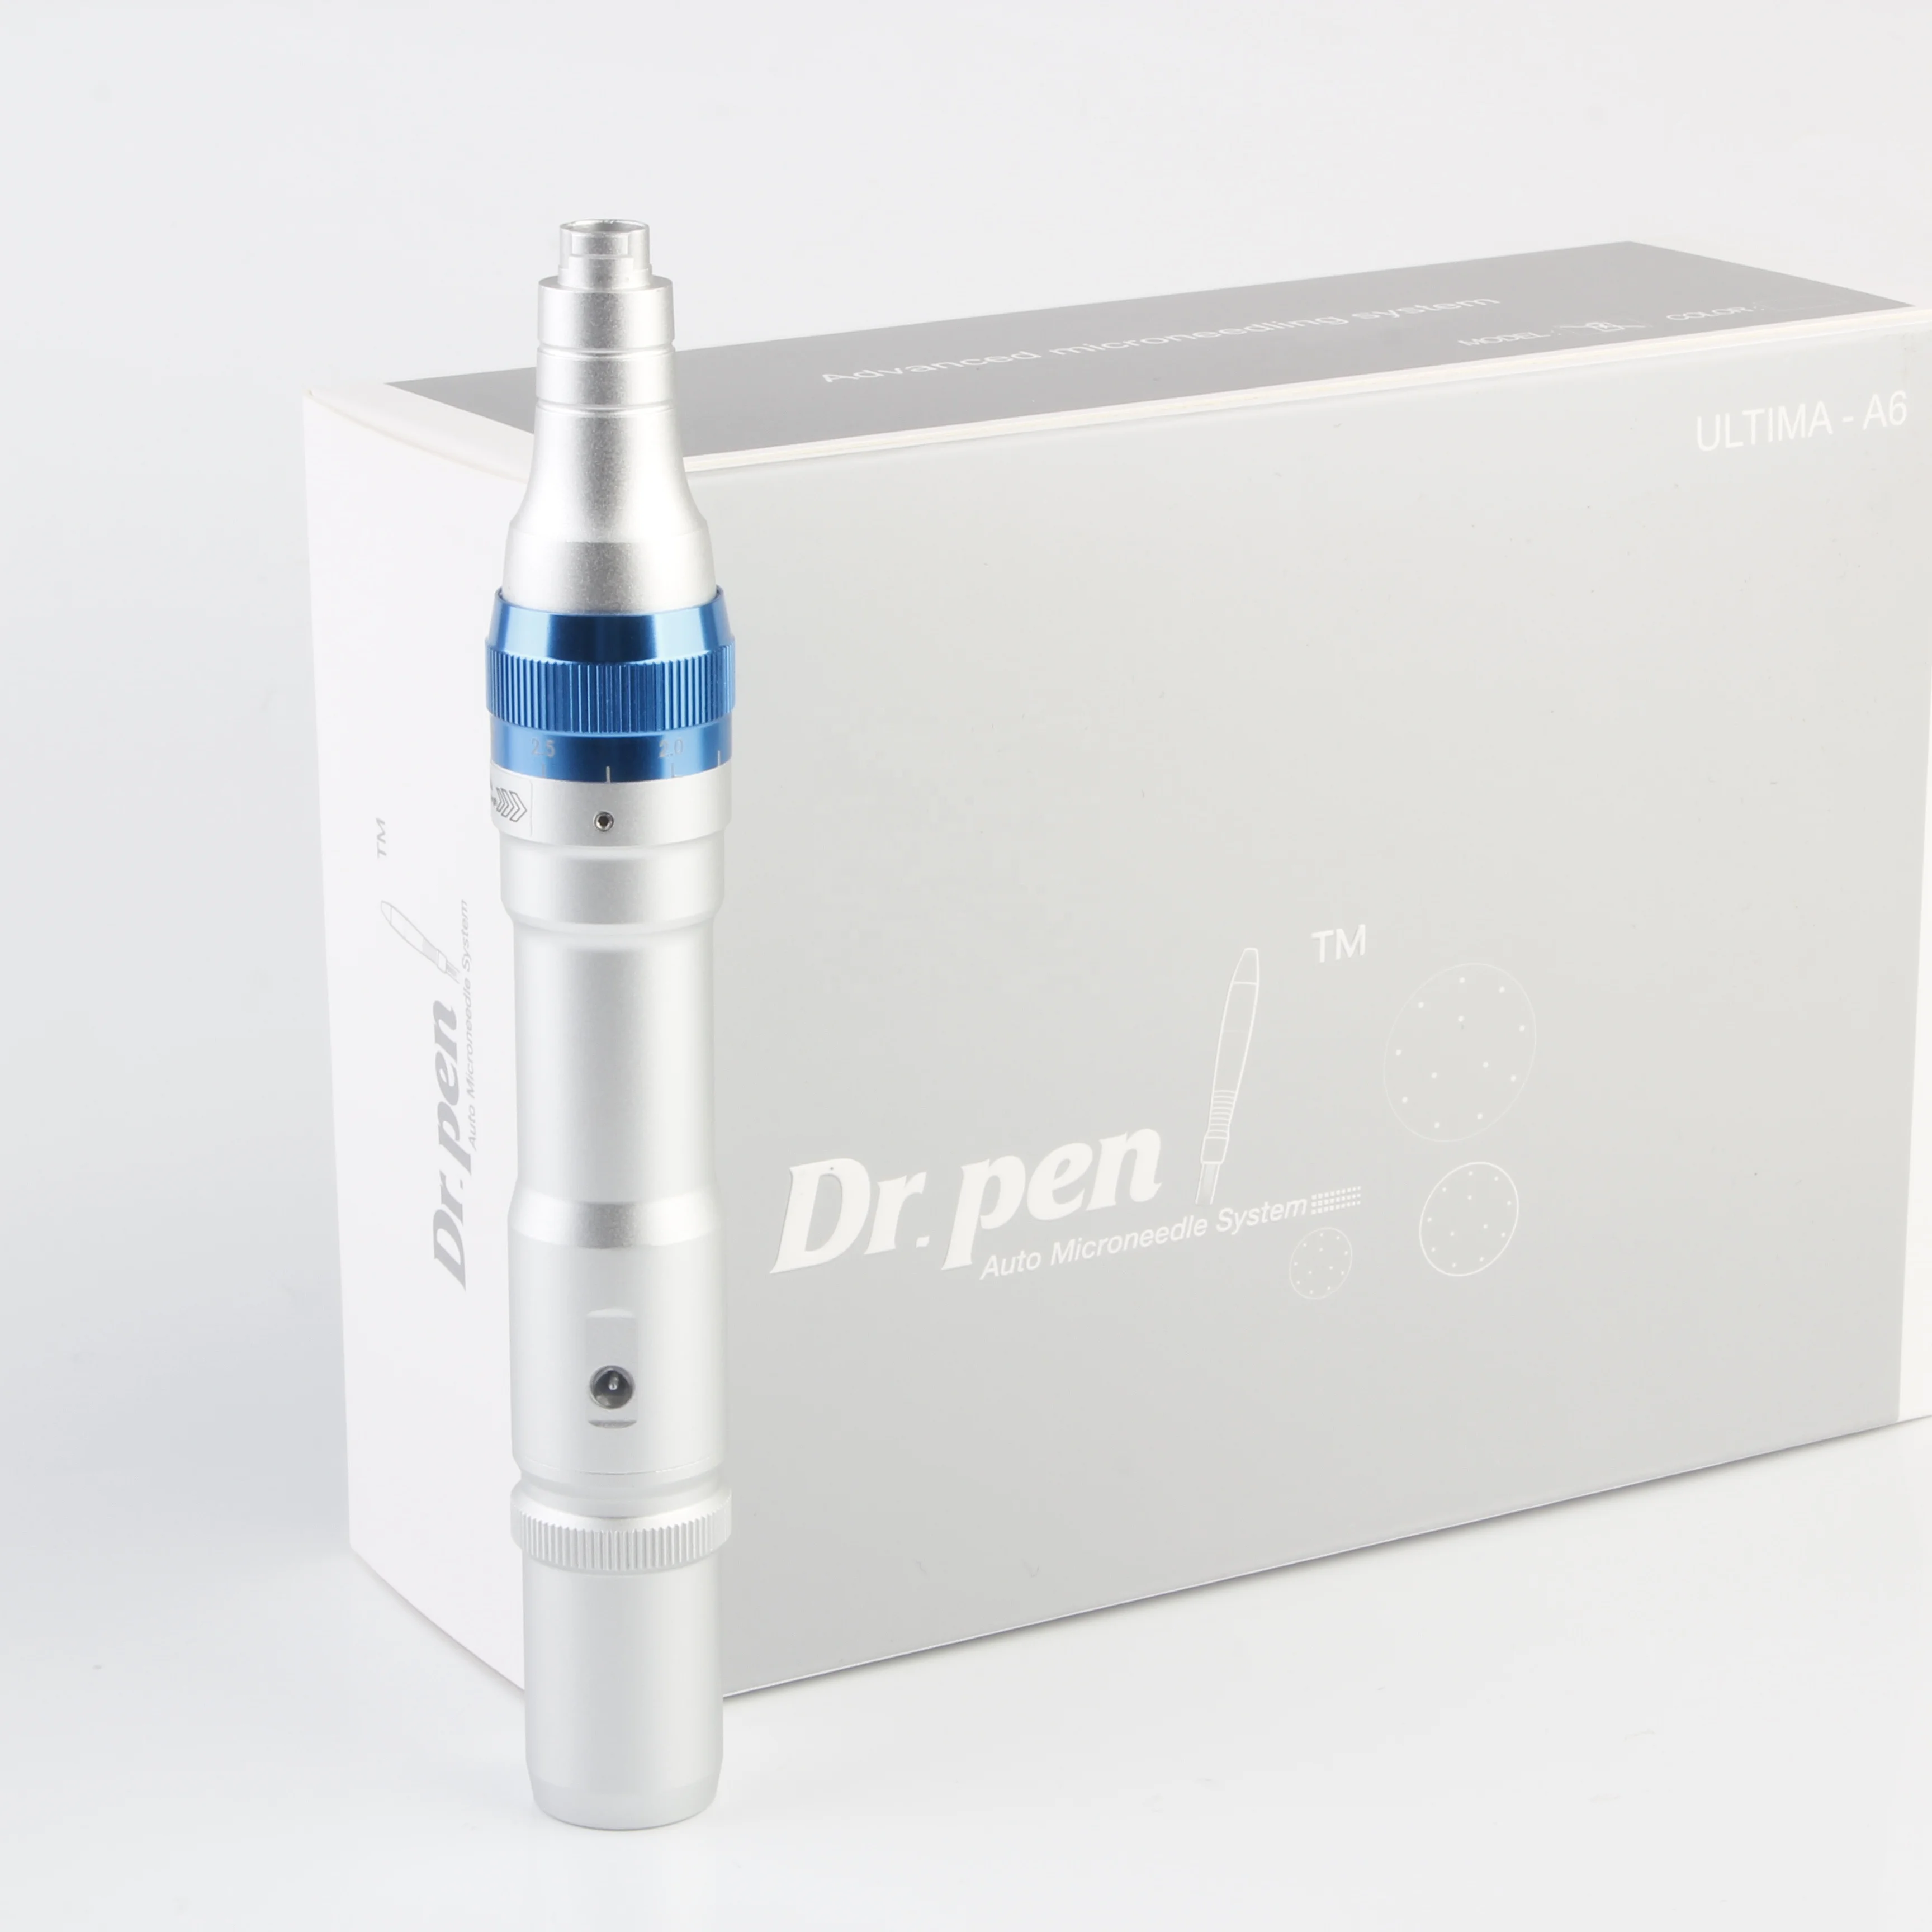 

Manufacturer Newest Derma Dr Pen Ultima A6 Wireless Derma Pen